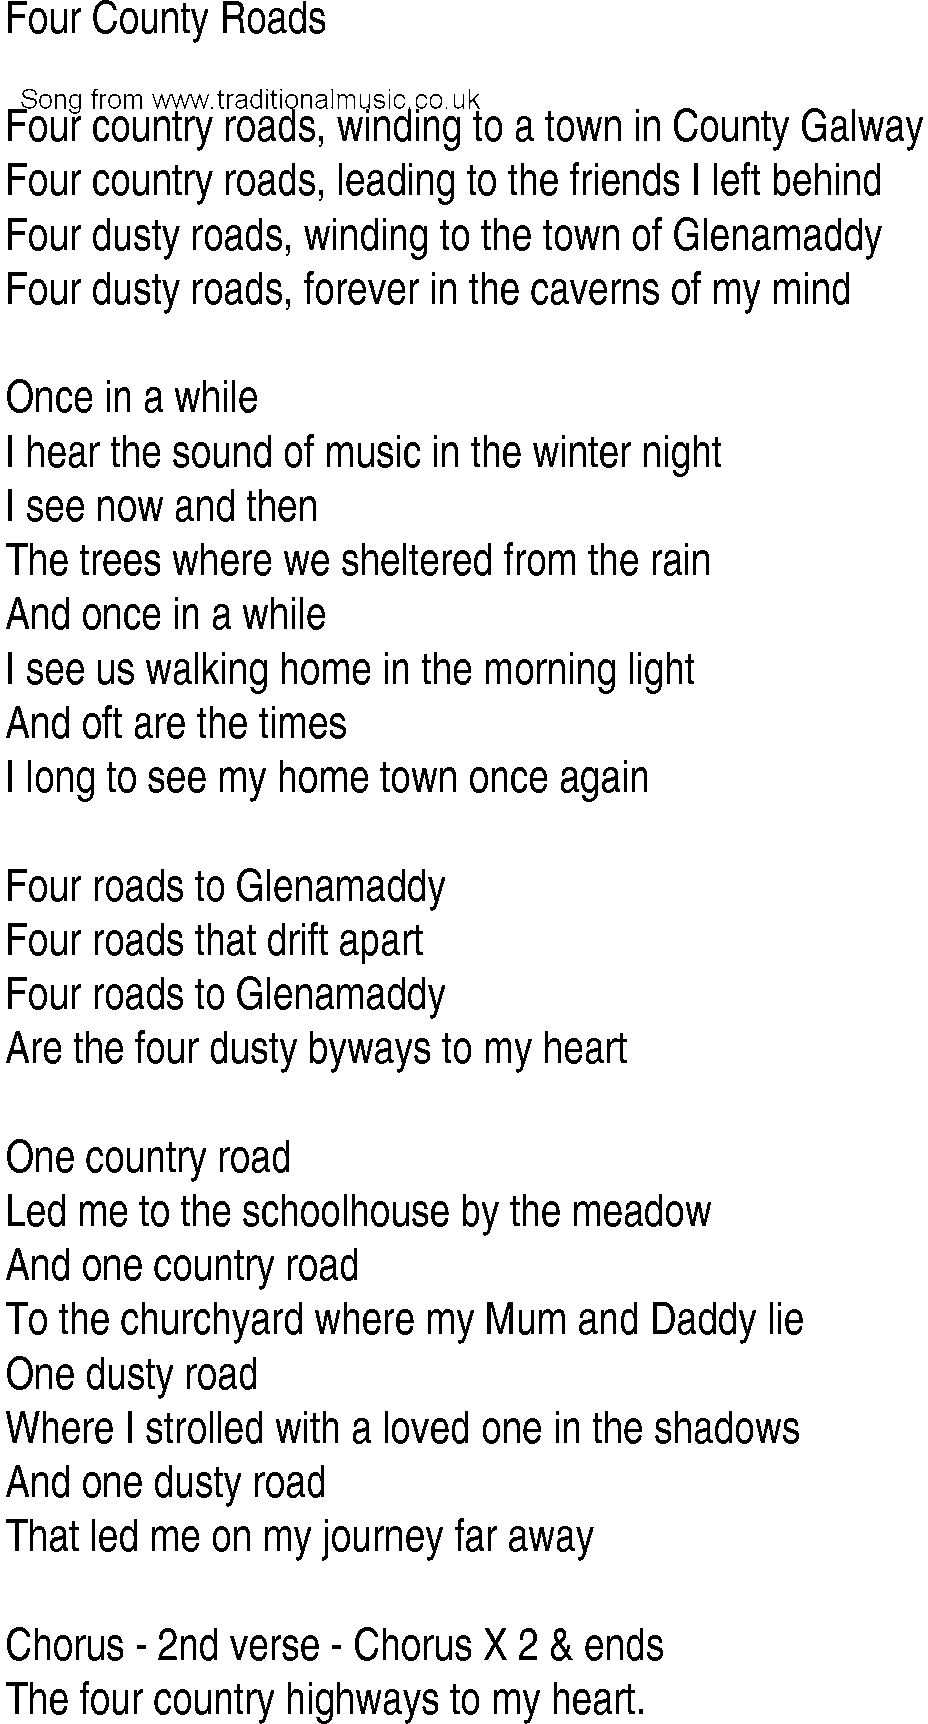 take me home country roads / lyrics